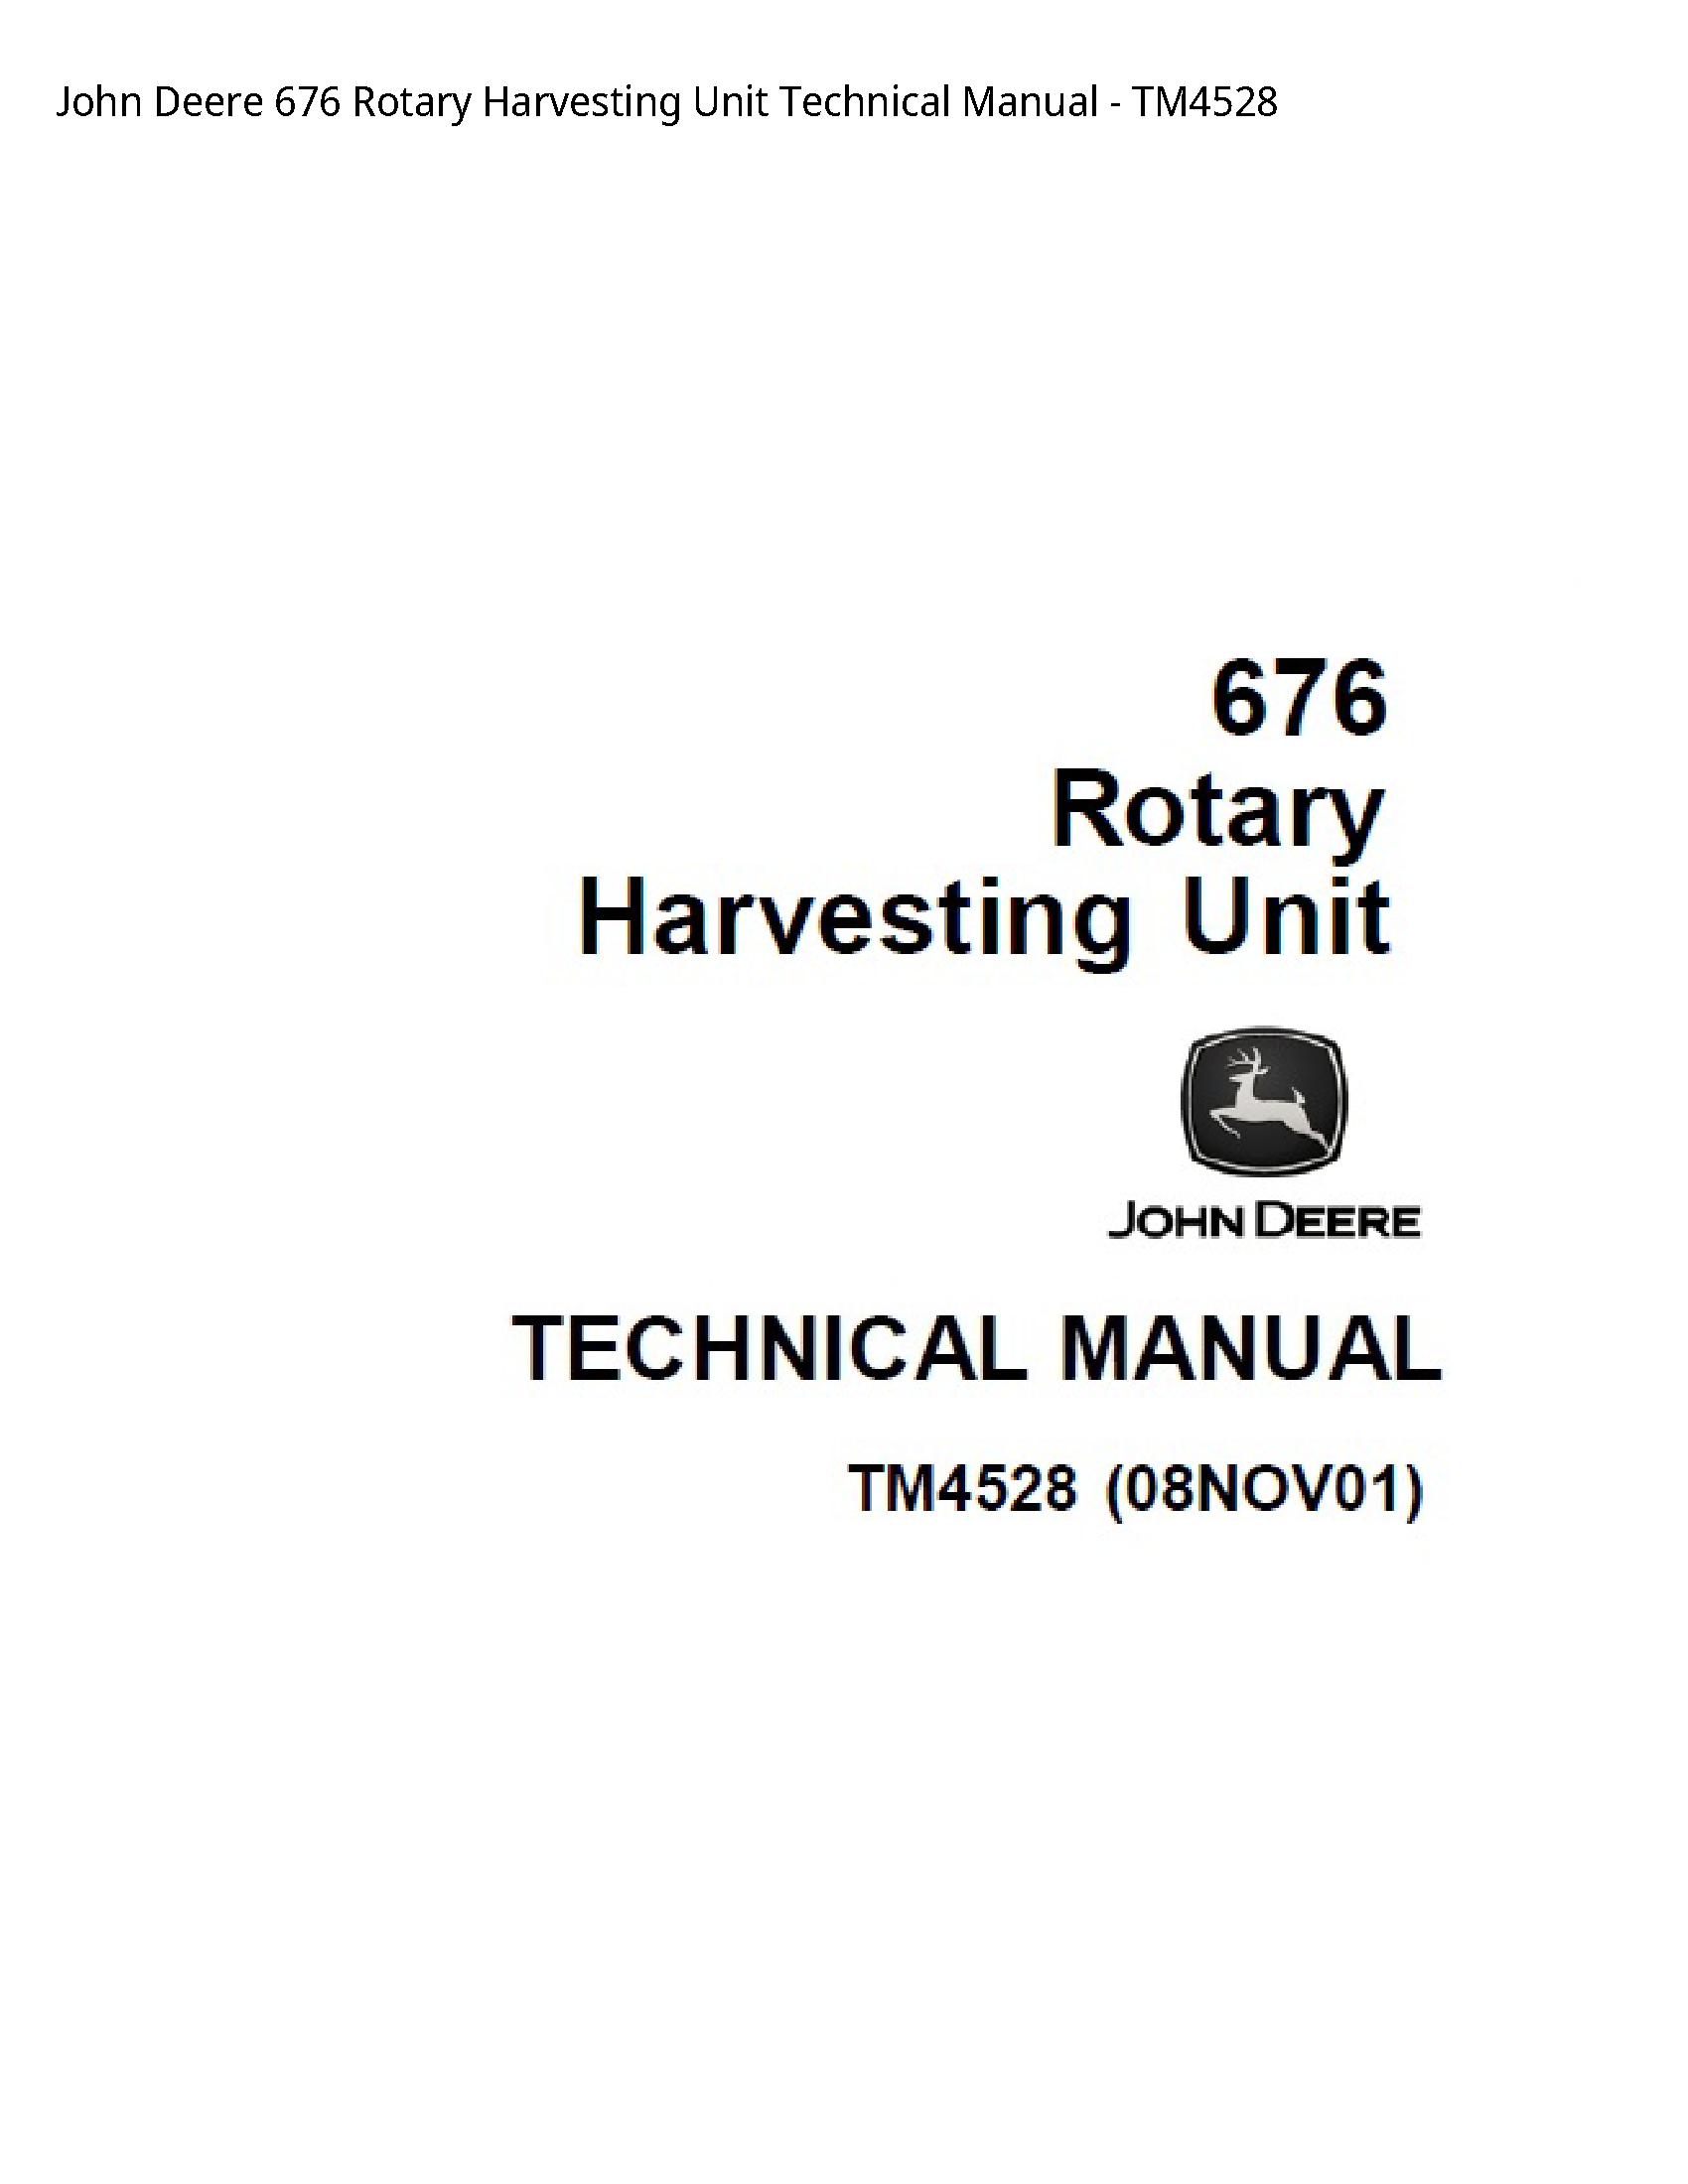 John Deere 676 Rotary Harvesting Unit Technical manual